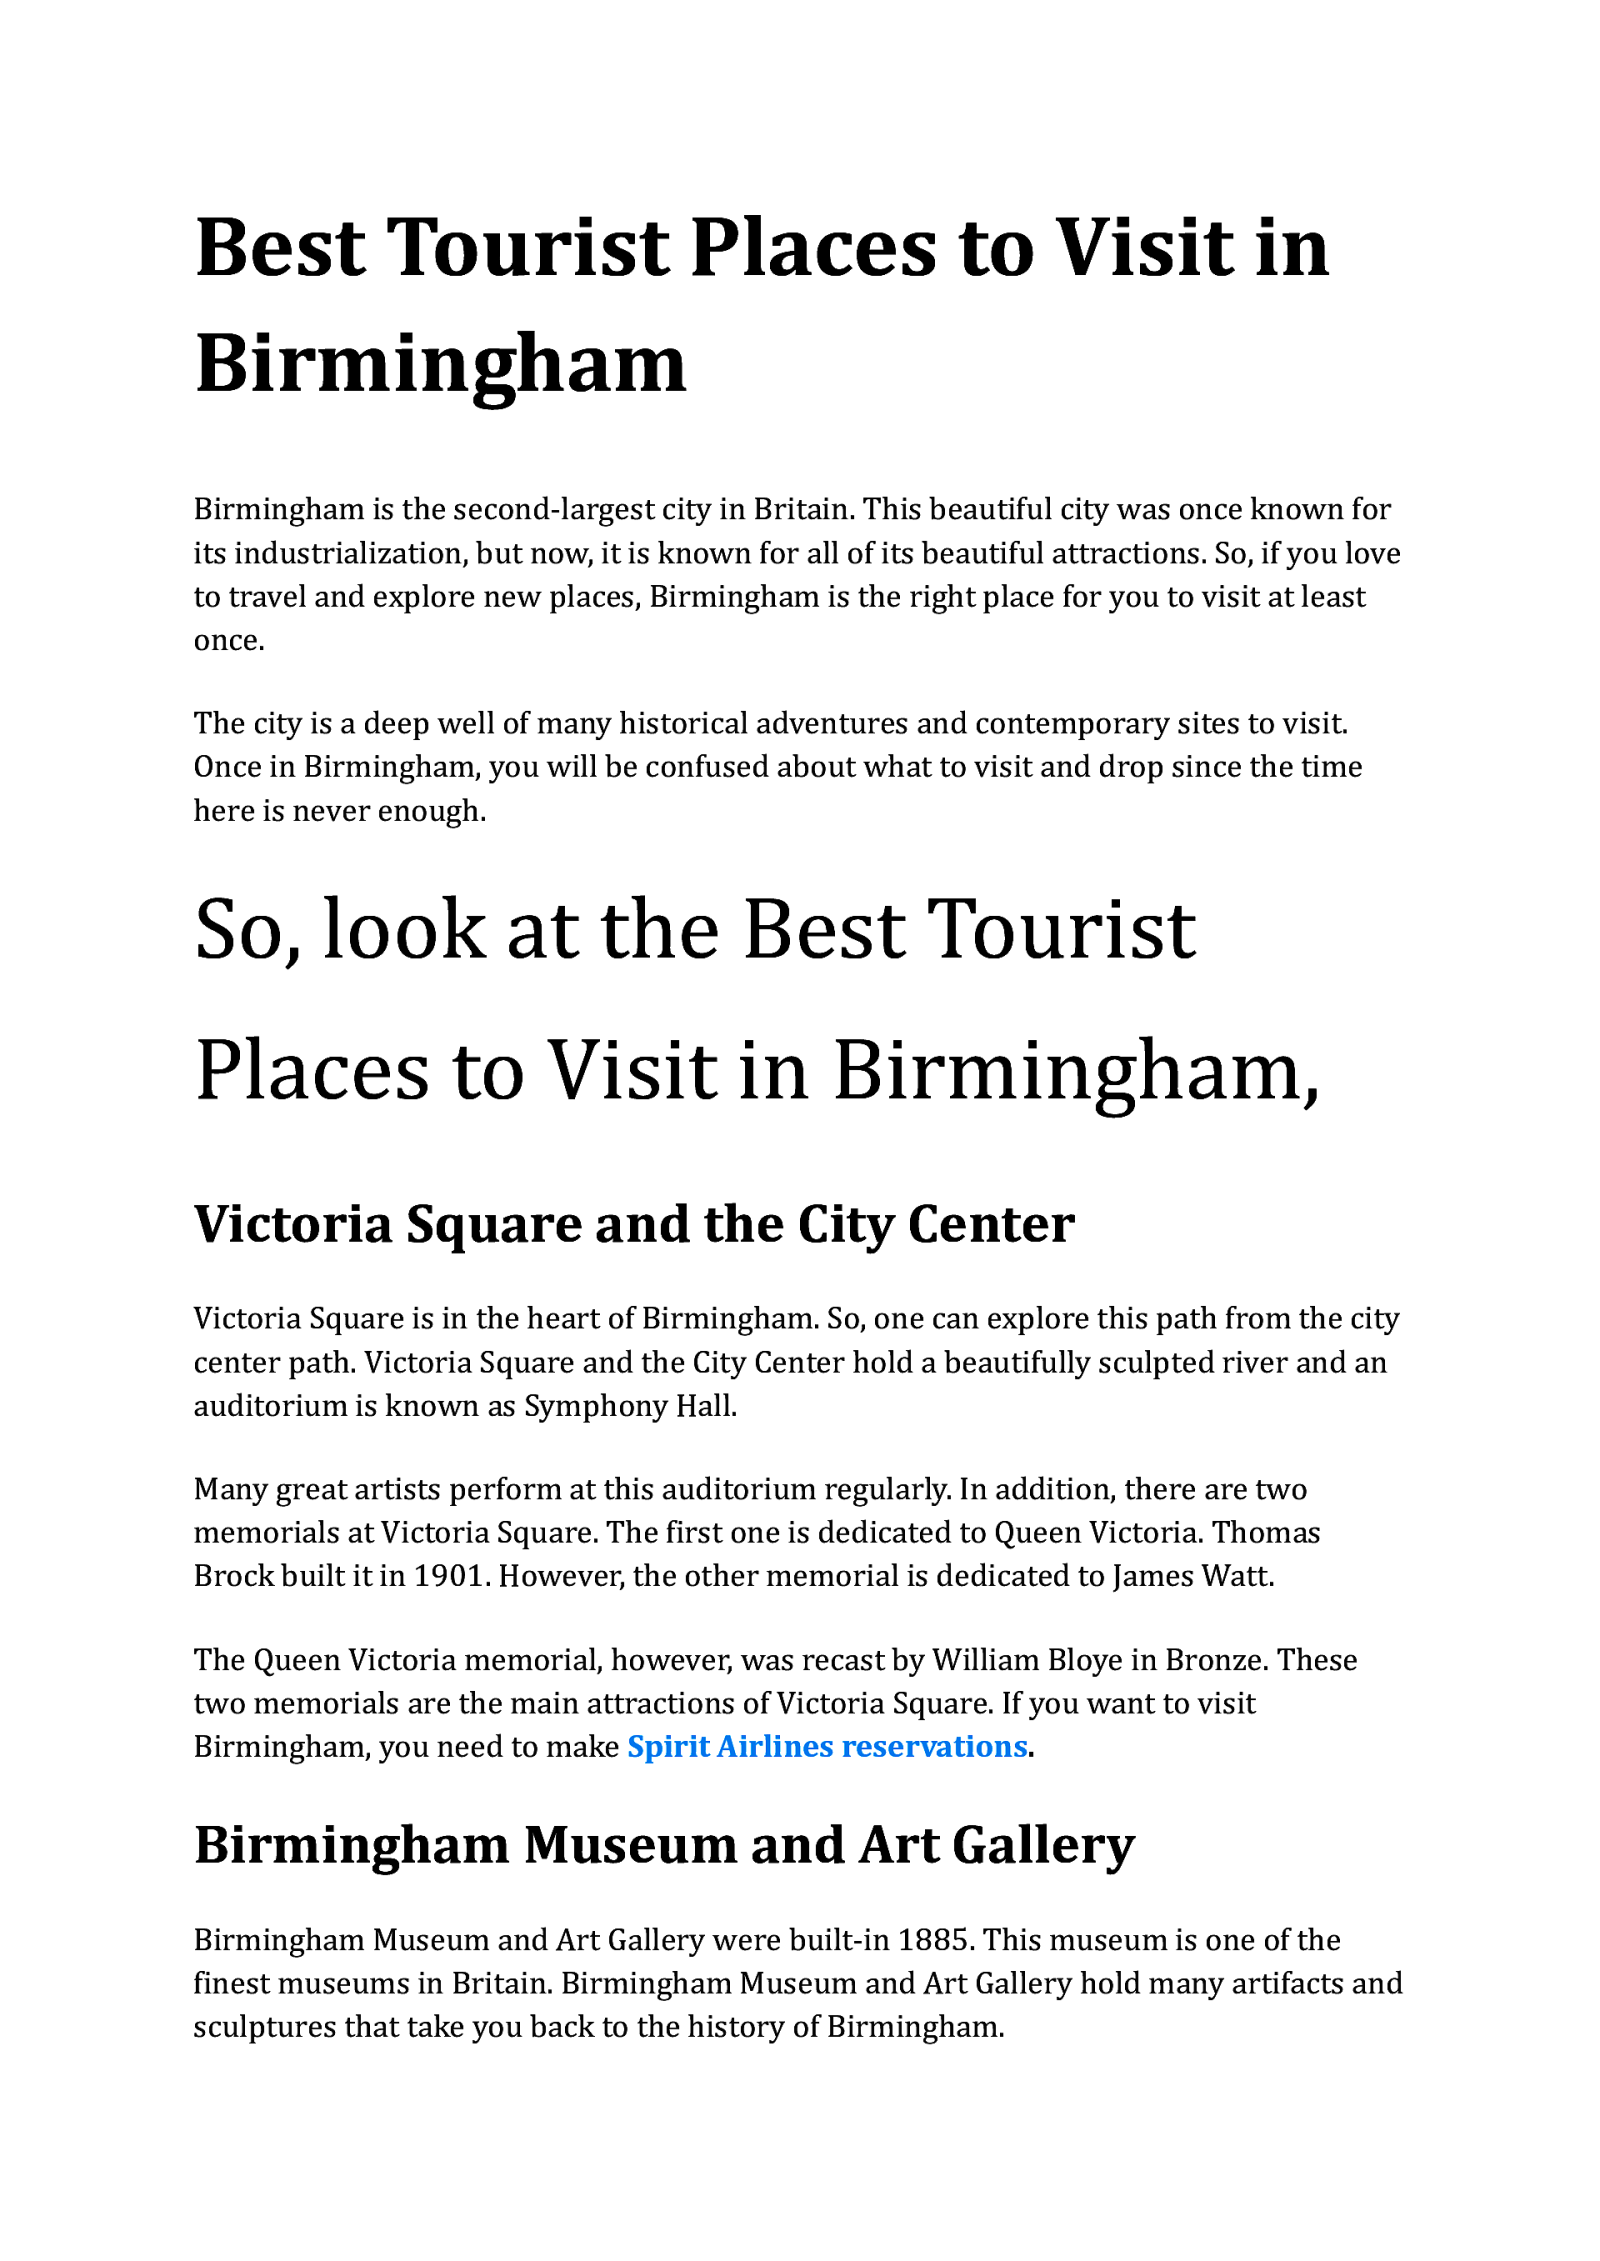 Best Tourist Places to Visit in Birmingham